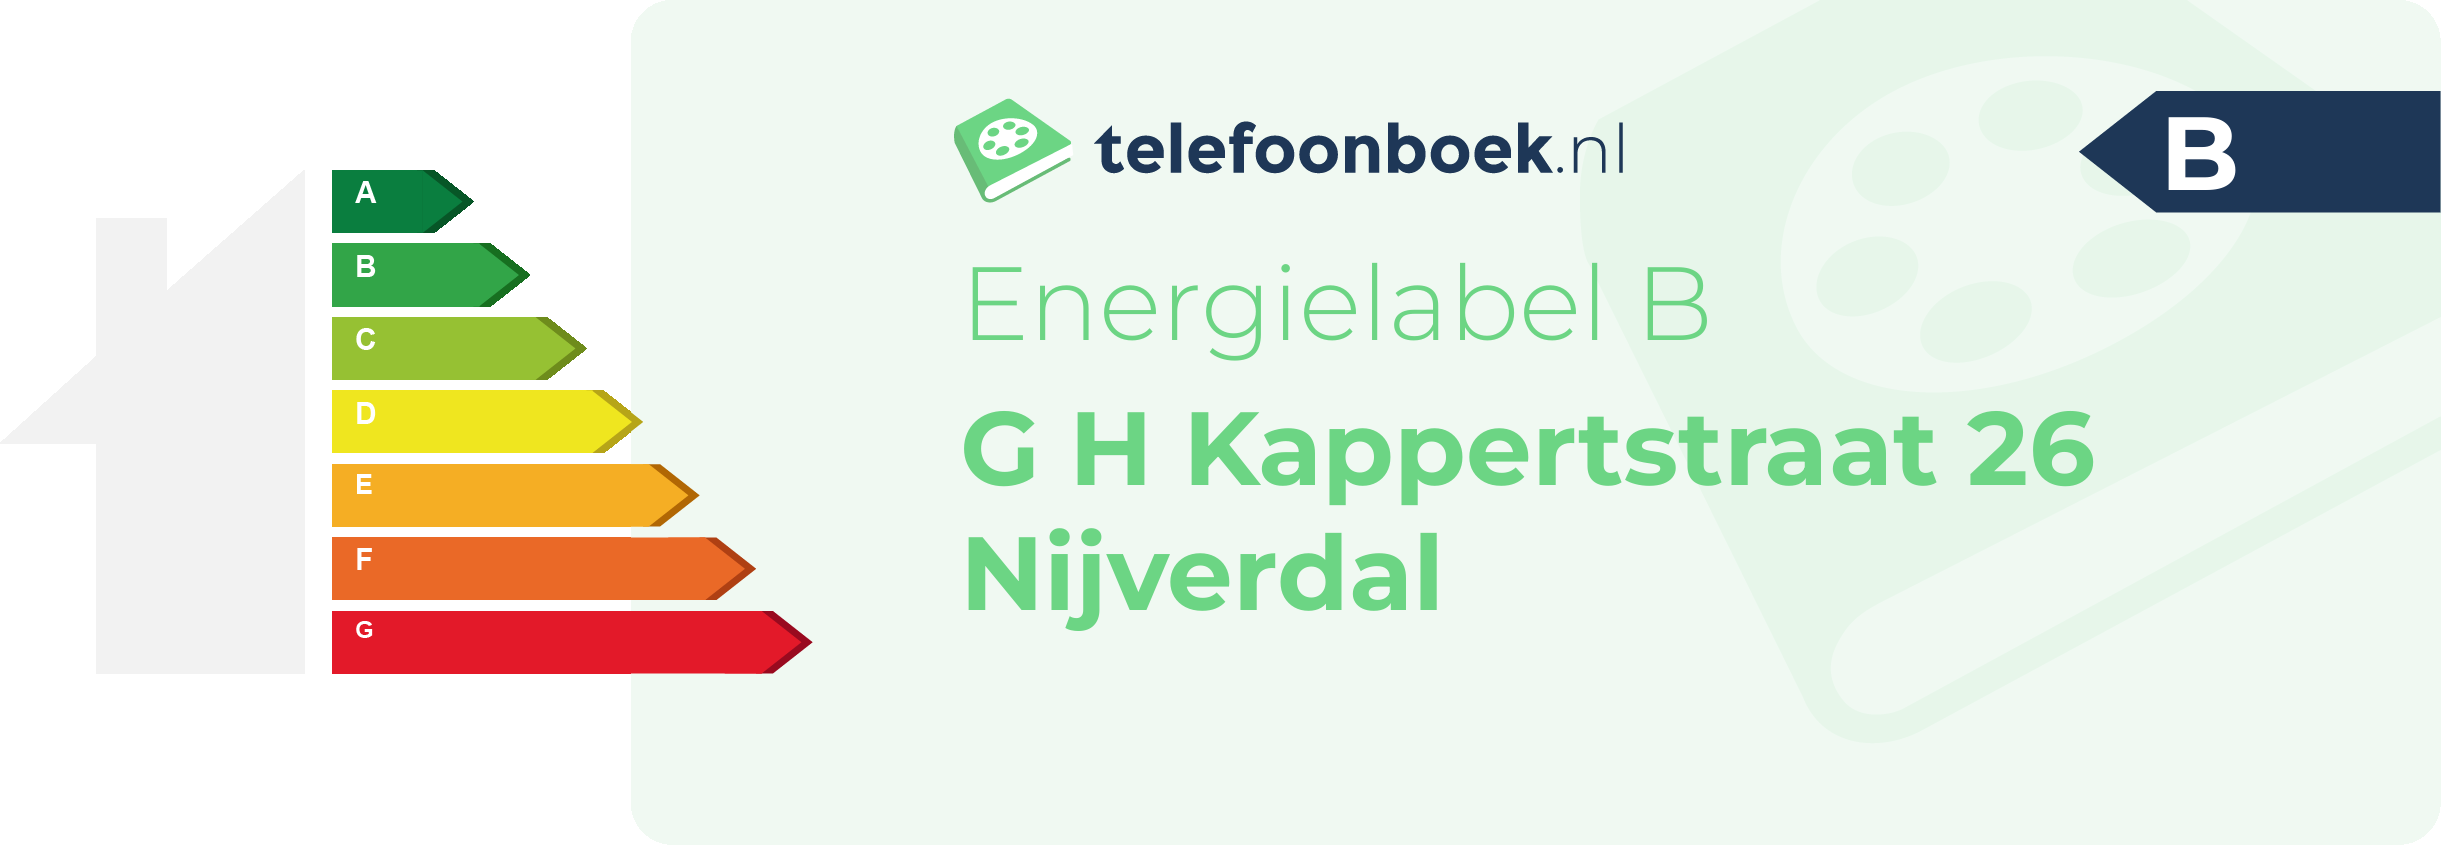 Energielabel G H Kappertstraat 26 Nijverdal